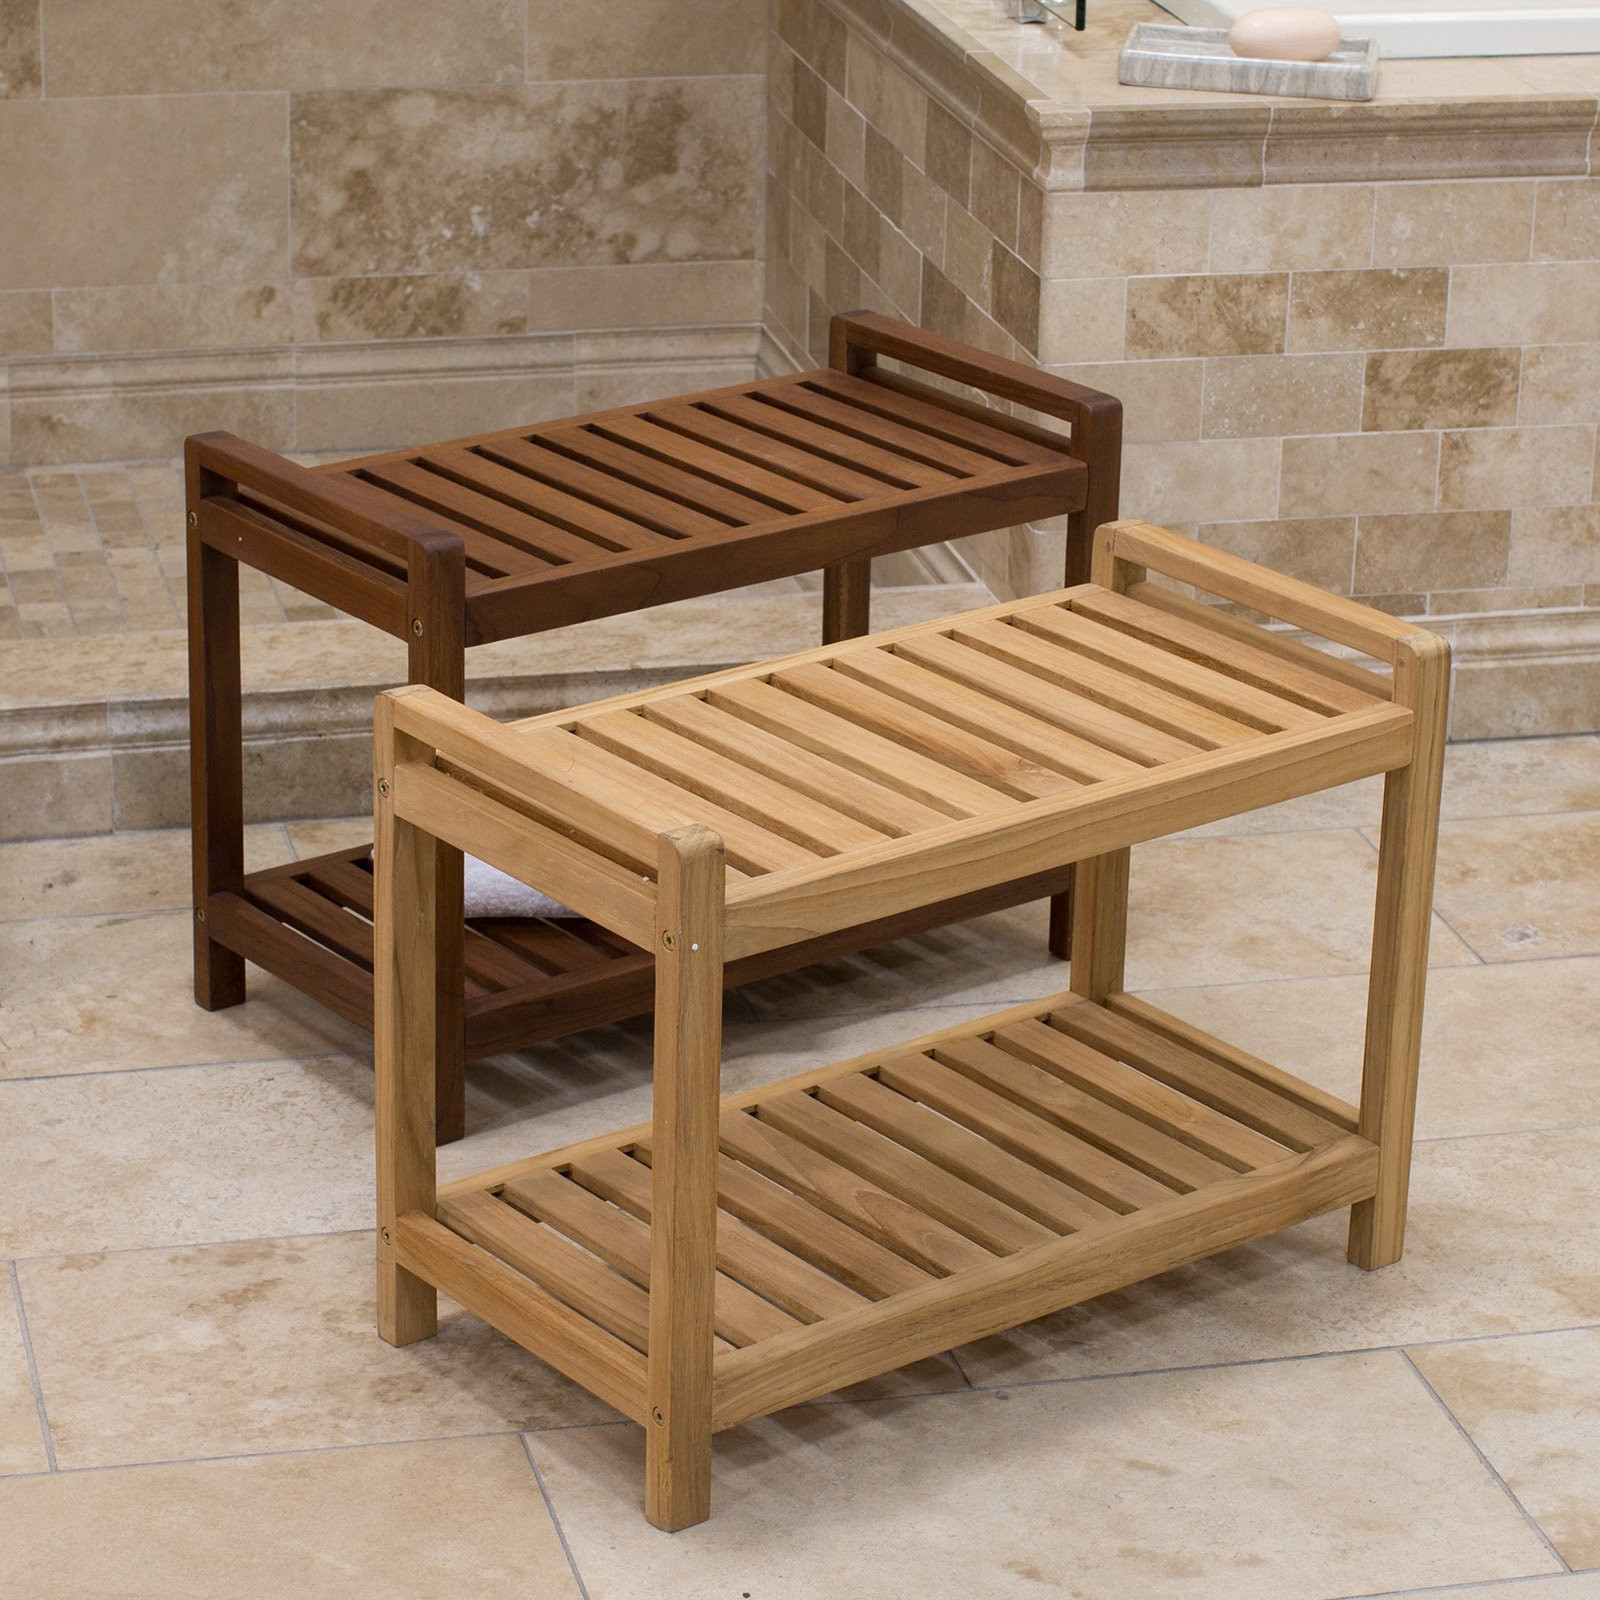 Small Bench For Bathroom
 Belham Living Teak Shower Bench Shower Seats at Hayneedle